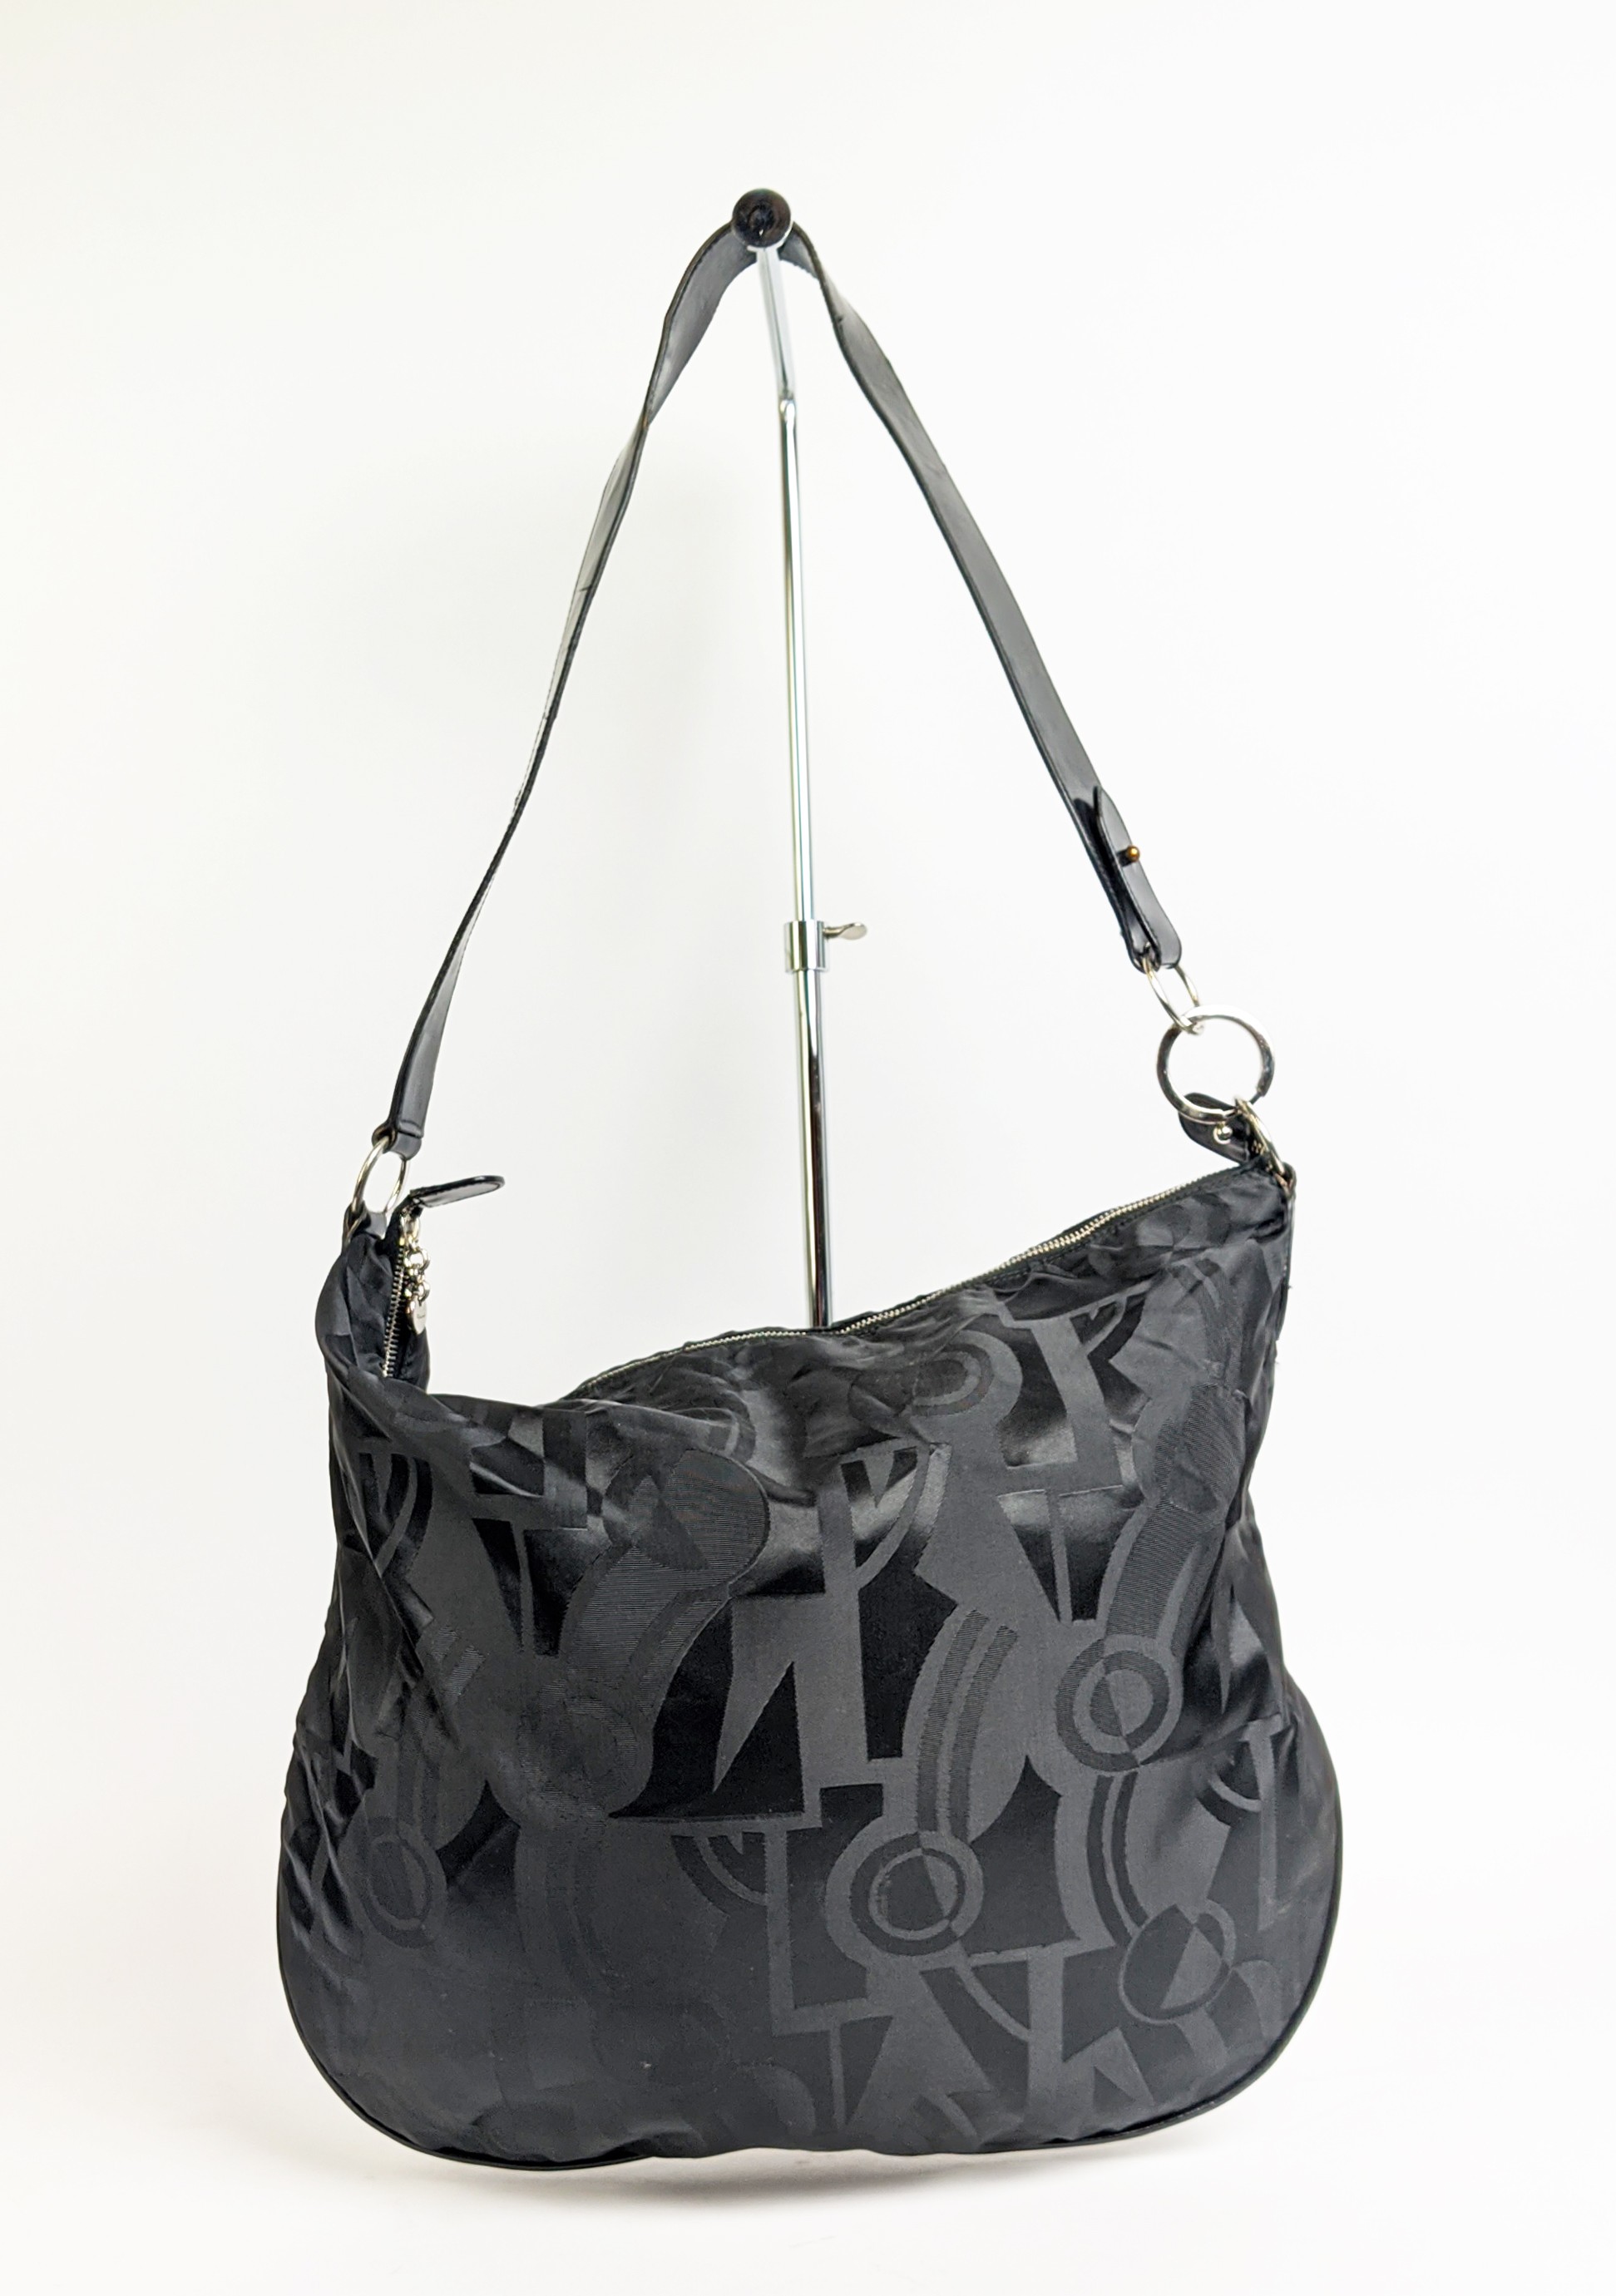 FERRAGAMO VINTAGE TOTE BAG, nylon with leather strap, top zippered closure and silver tone - Bild 3 aus 19